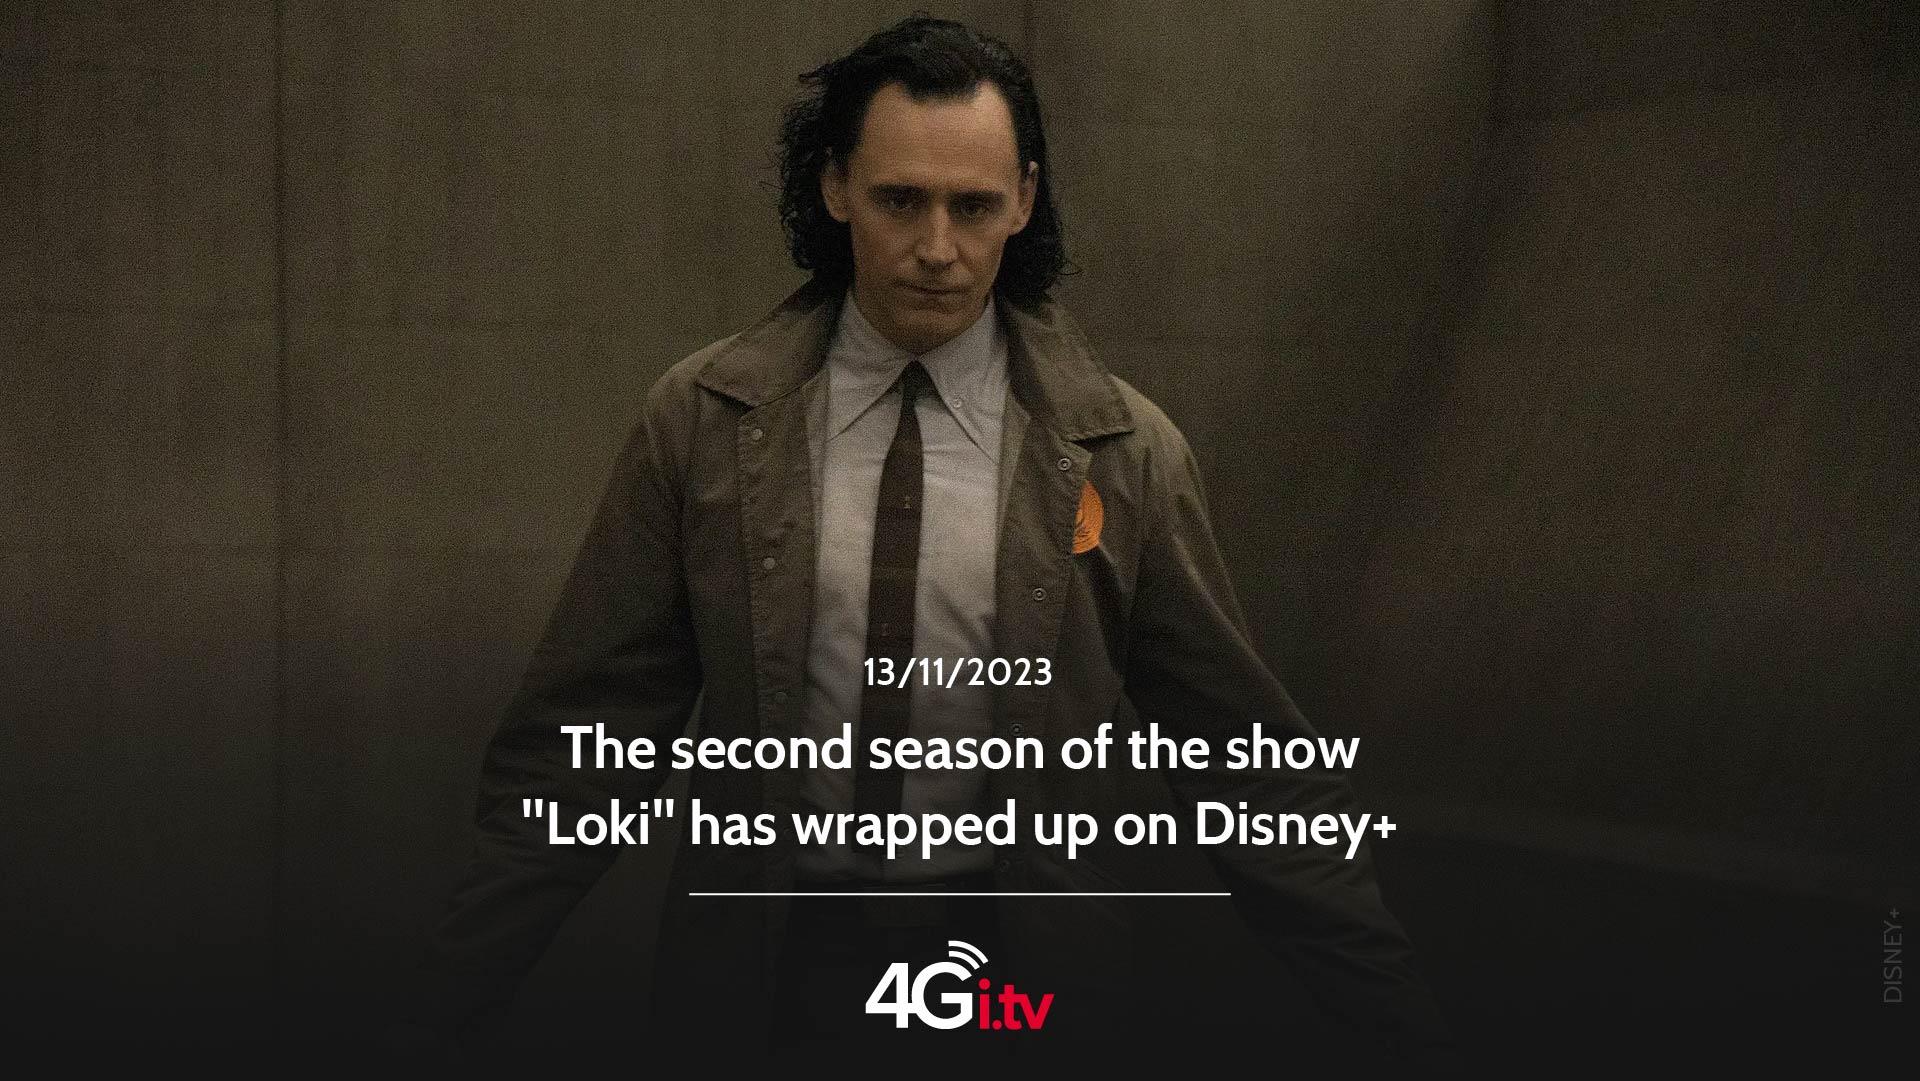 Lesen Sie mehr über den Artikel The second season of the show “Loki” has wrapped up on Disney+